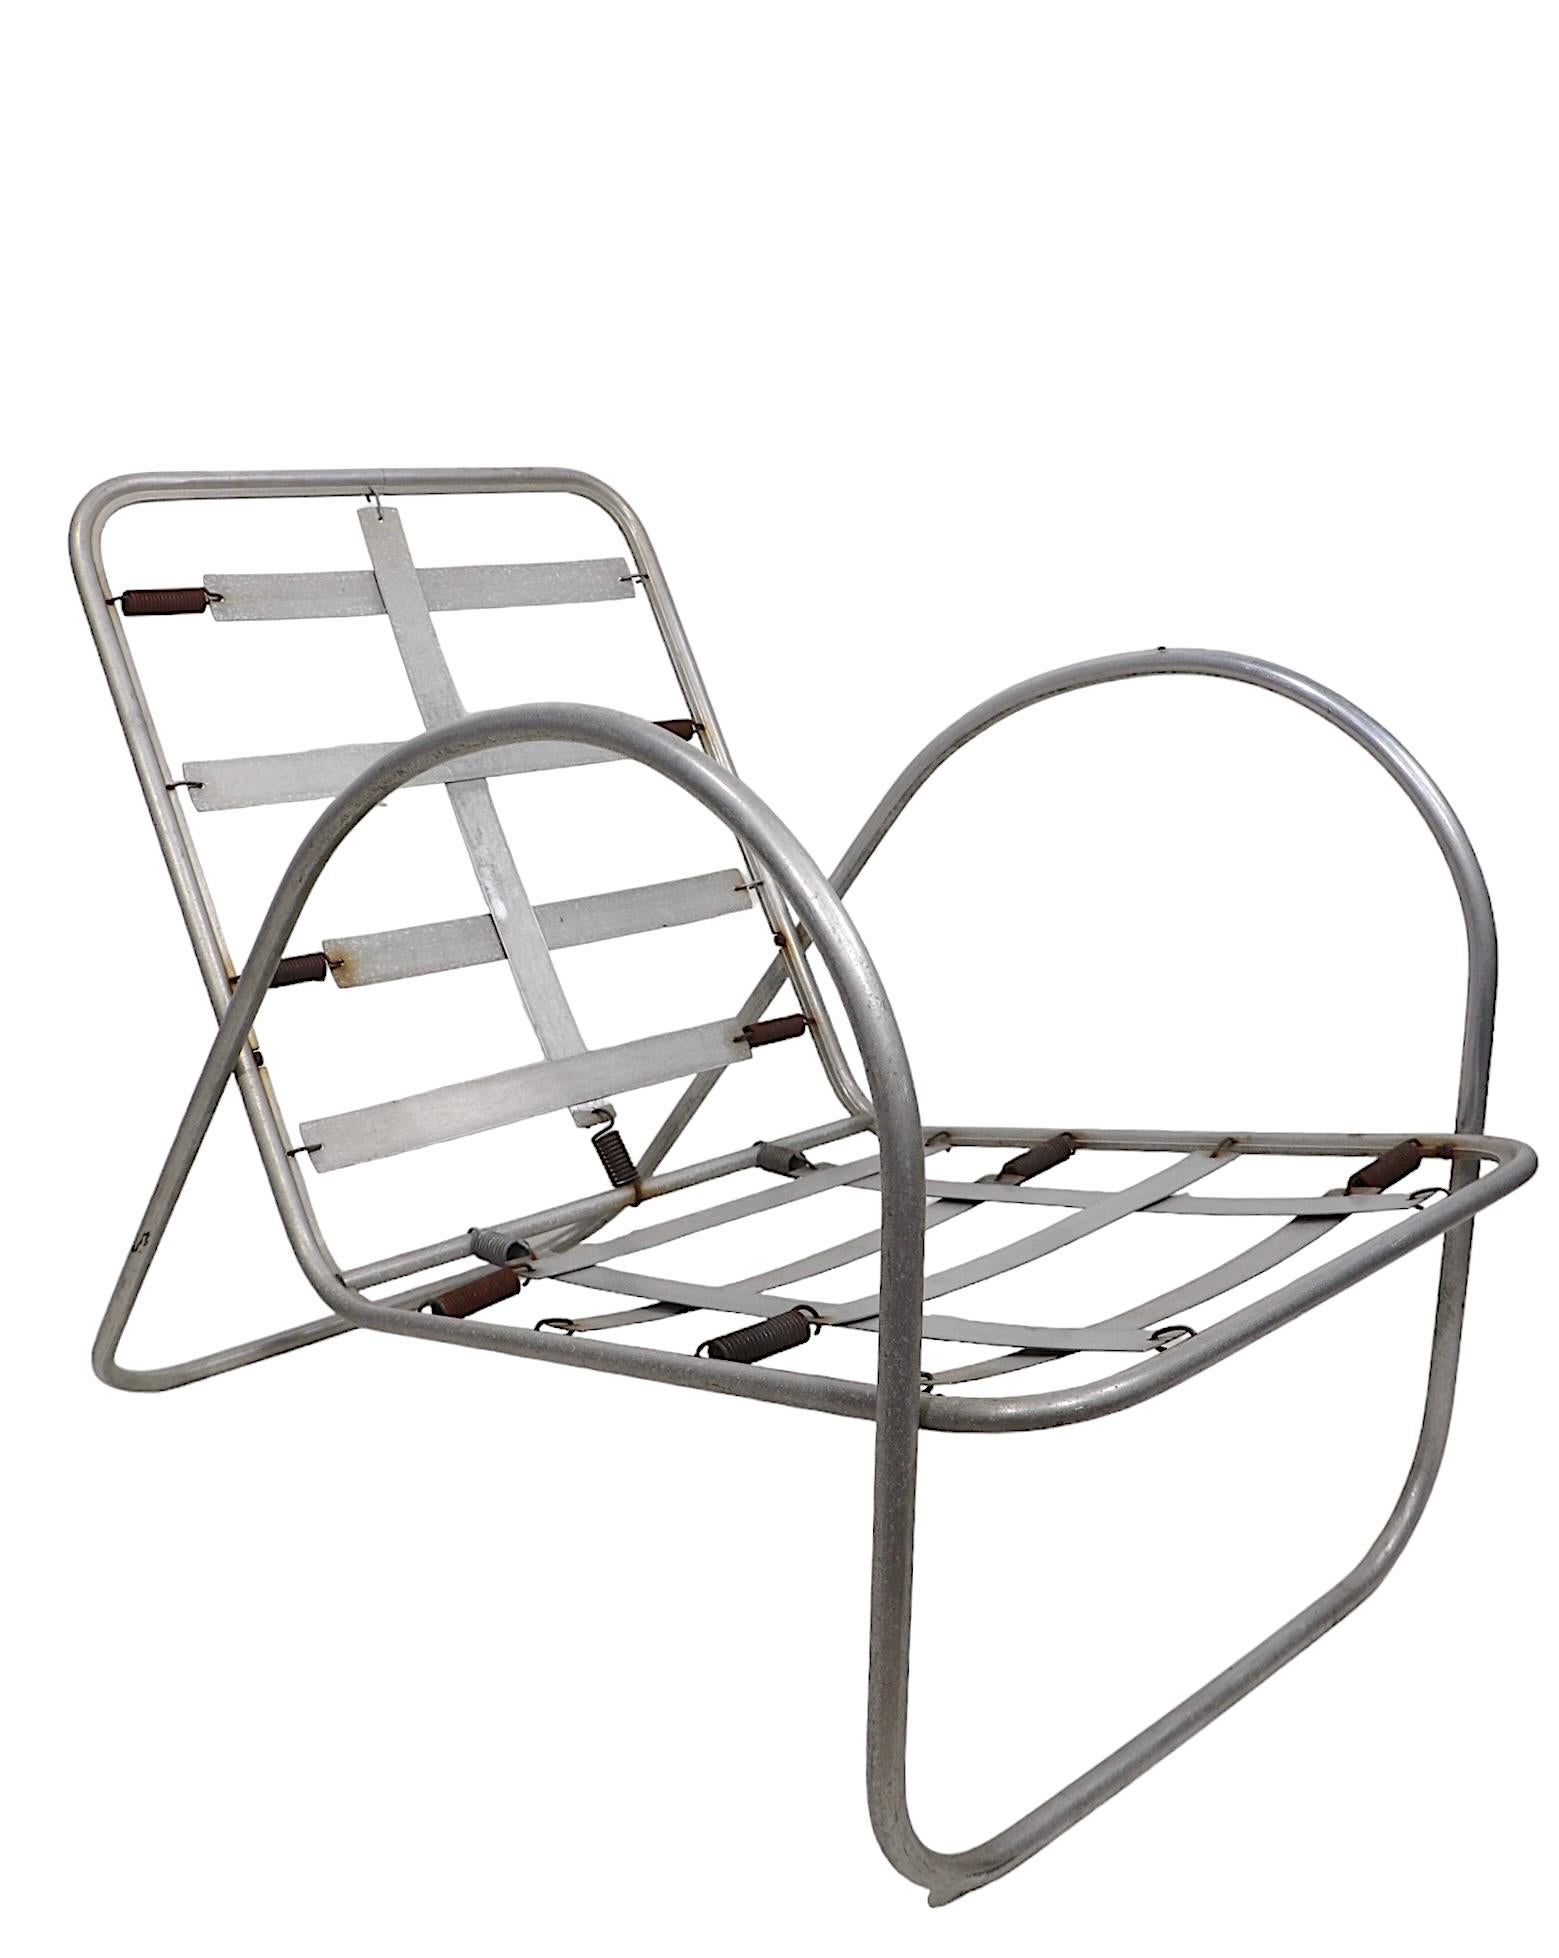 Art Deco Streamline Design Aluminum Patio Poolside Lounge Chair  Richard Neutra  1930/40s For Sale